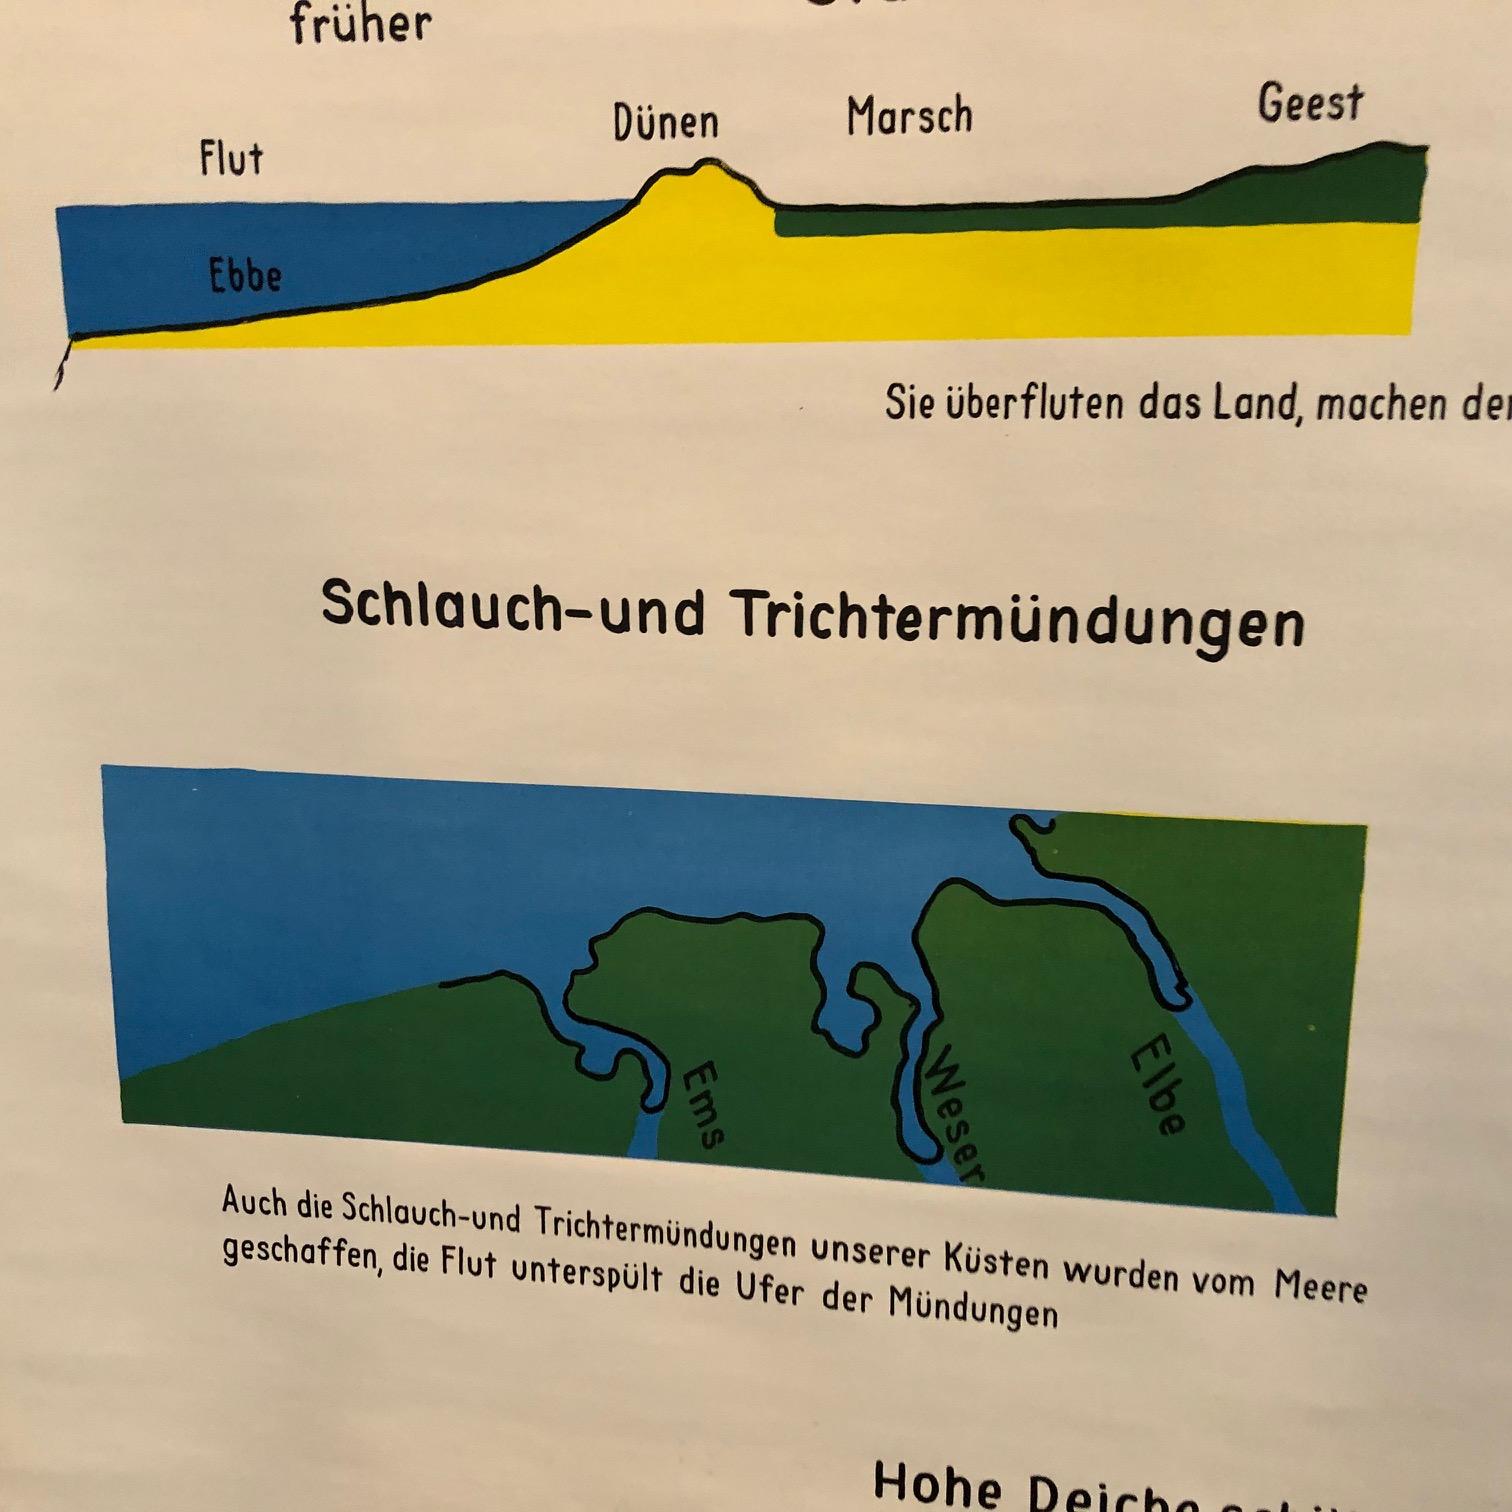 Deutsche wissenschaftliche Meeres-Tidalerosion-Geologie-Karte (Industriell) im Angebot